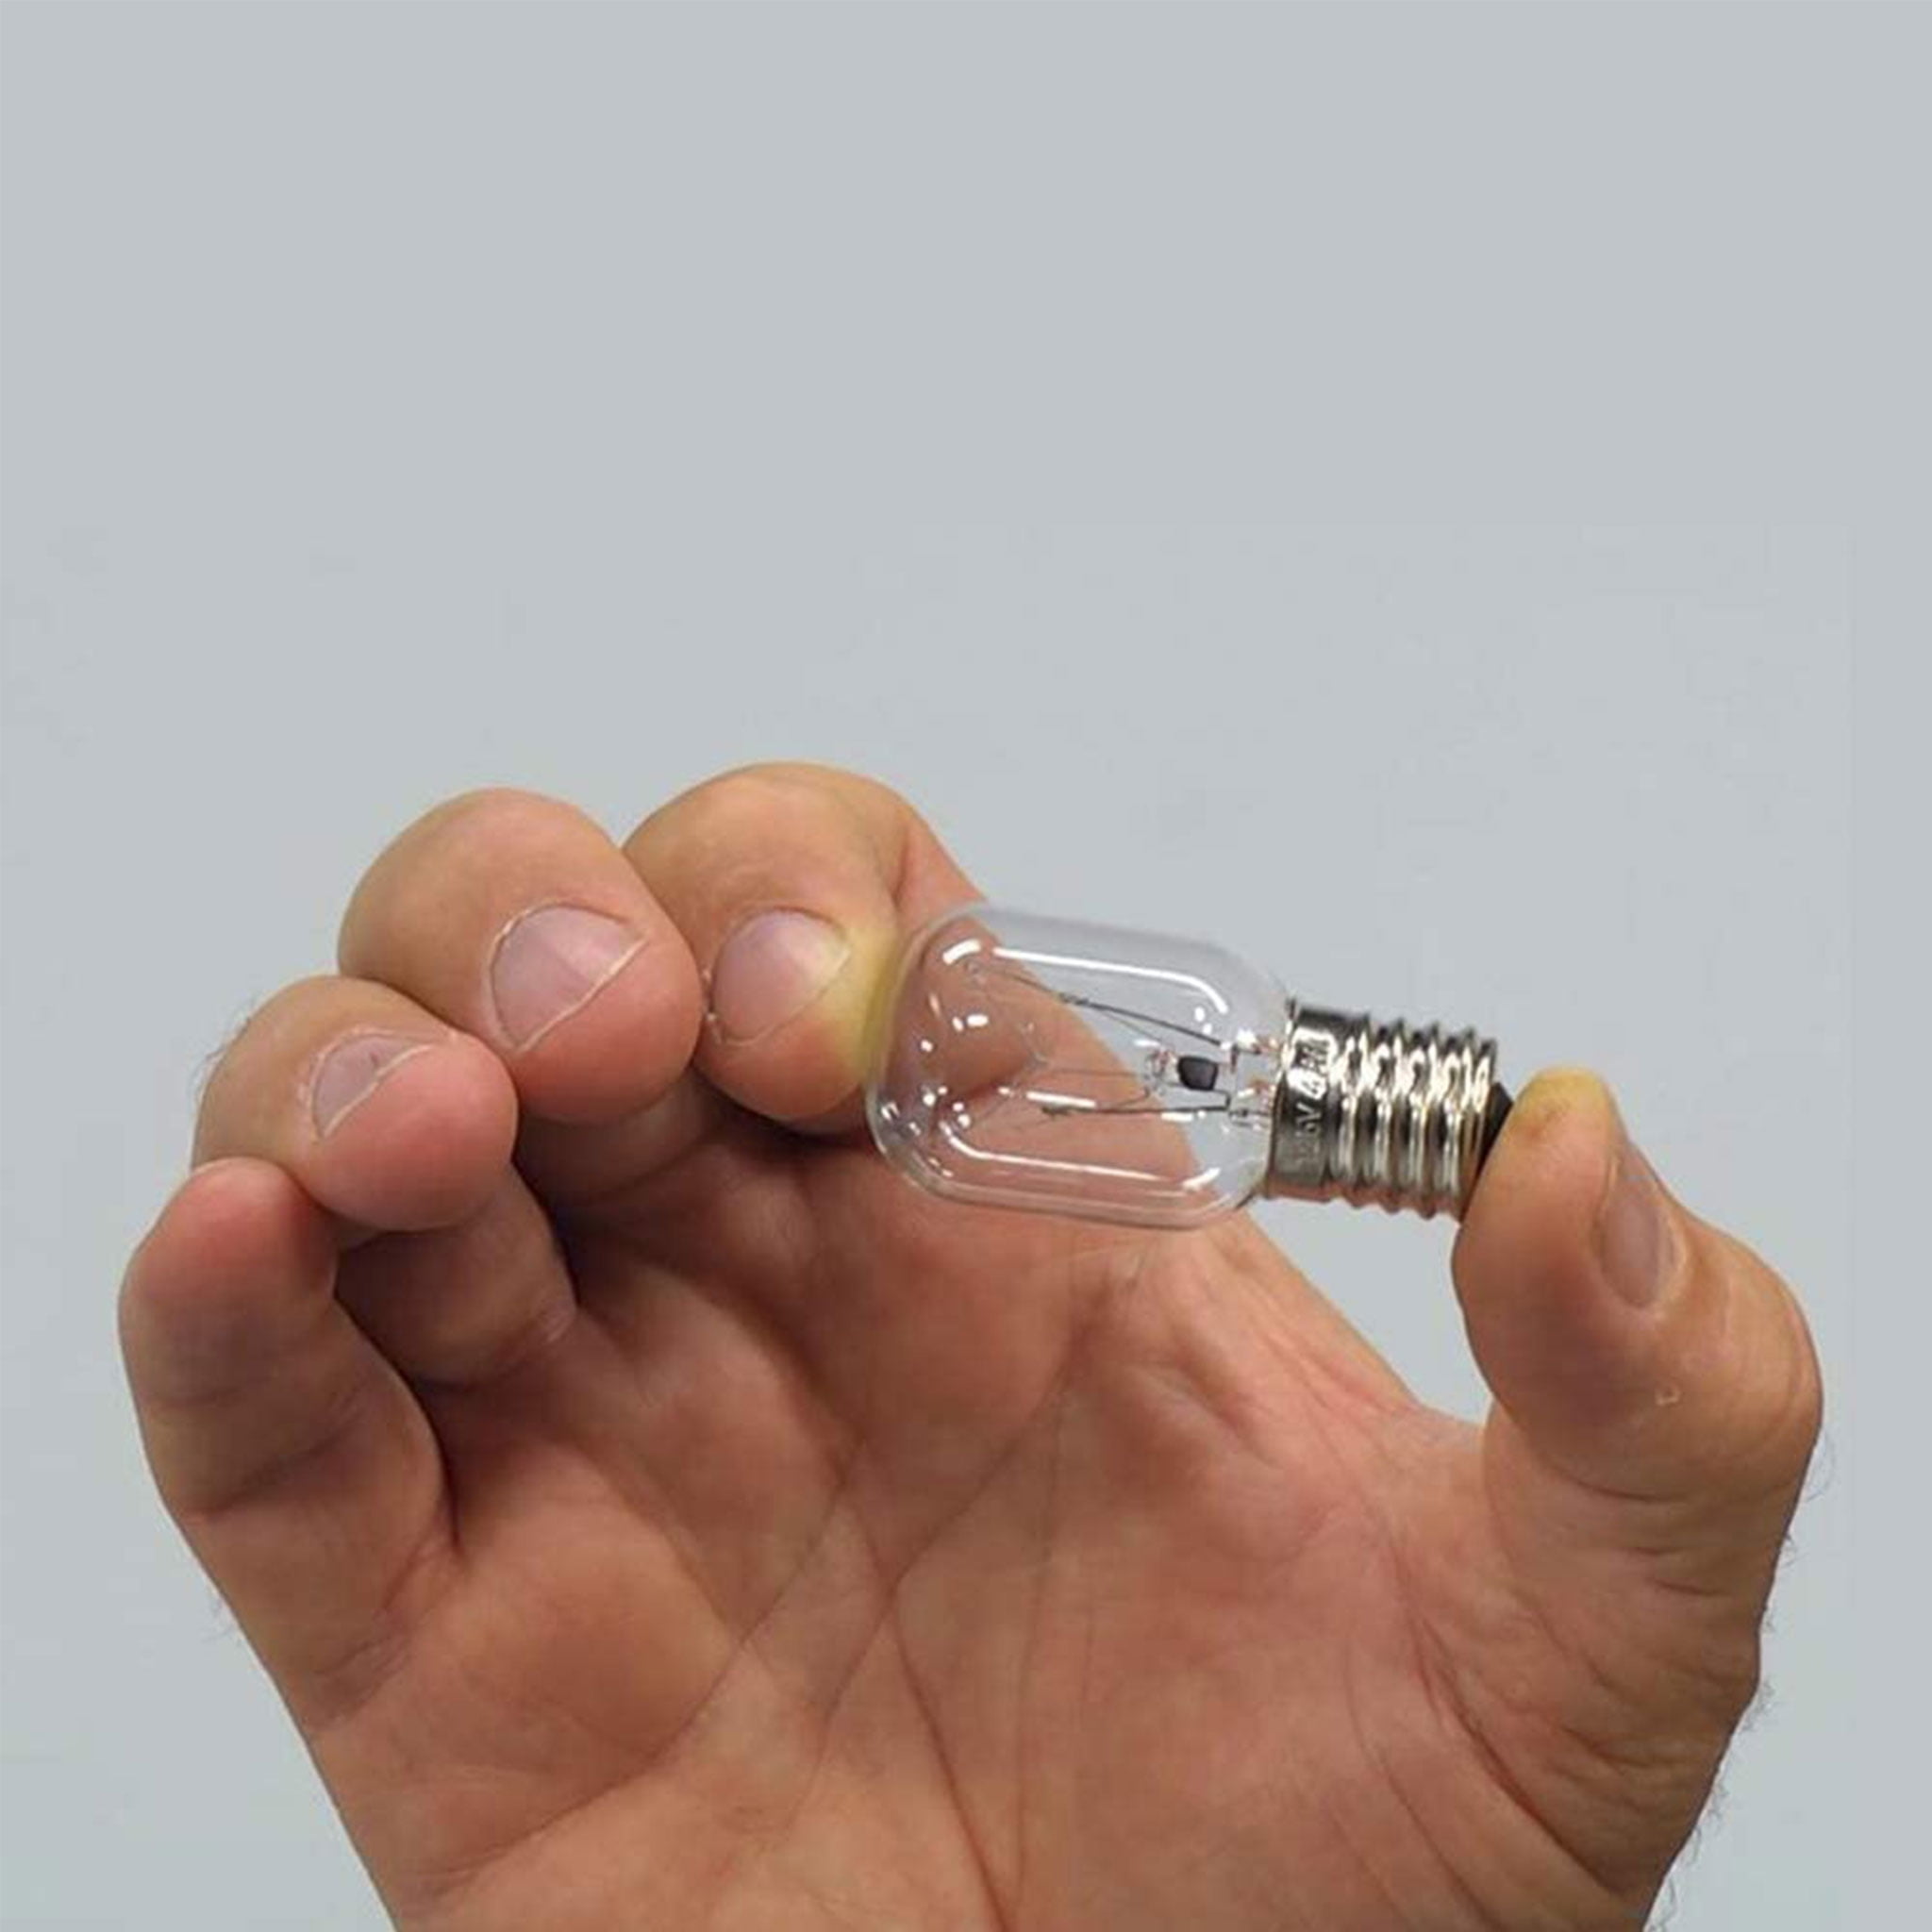 Microwave Surface Light Bulb, 40-watt (replaces 8183993, 8206232, 8206443)  8206232A parts